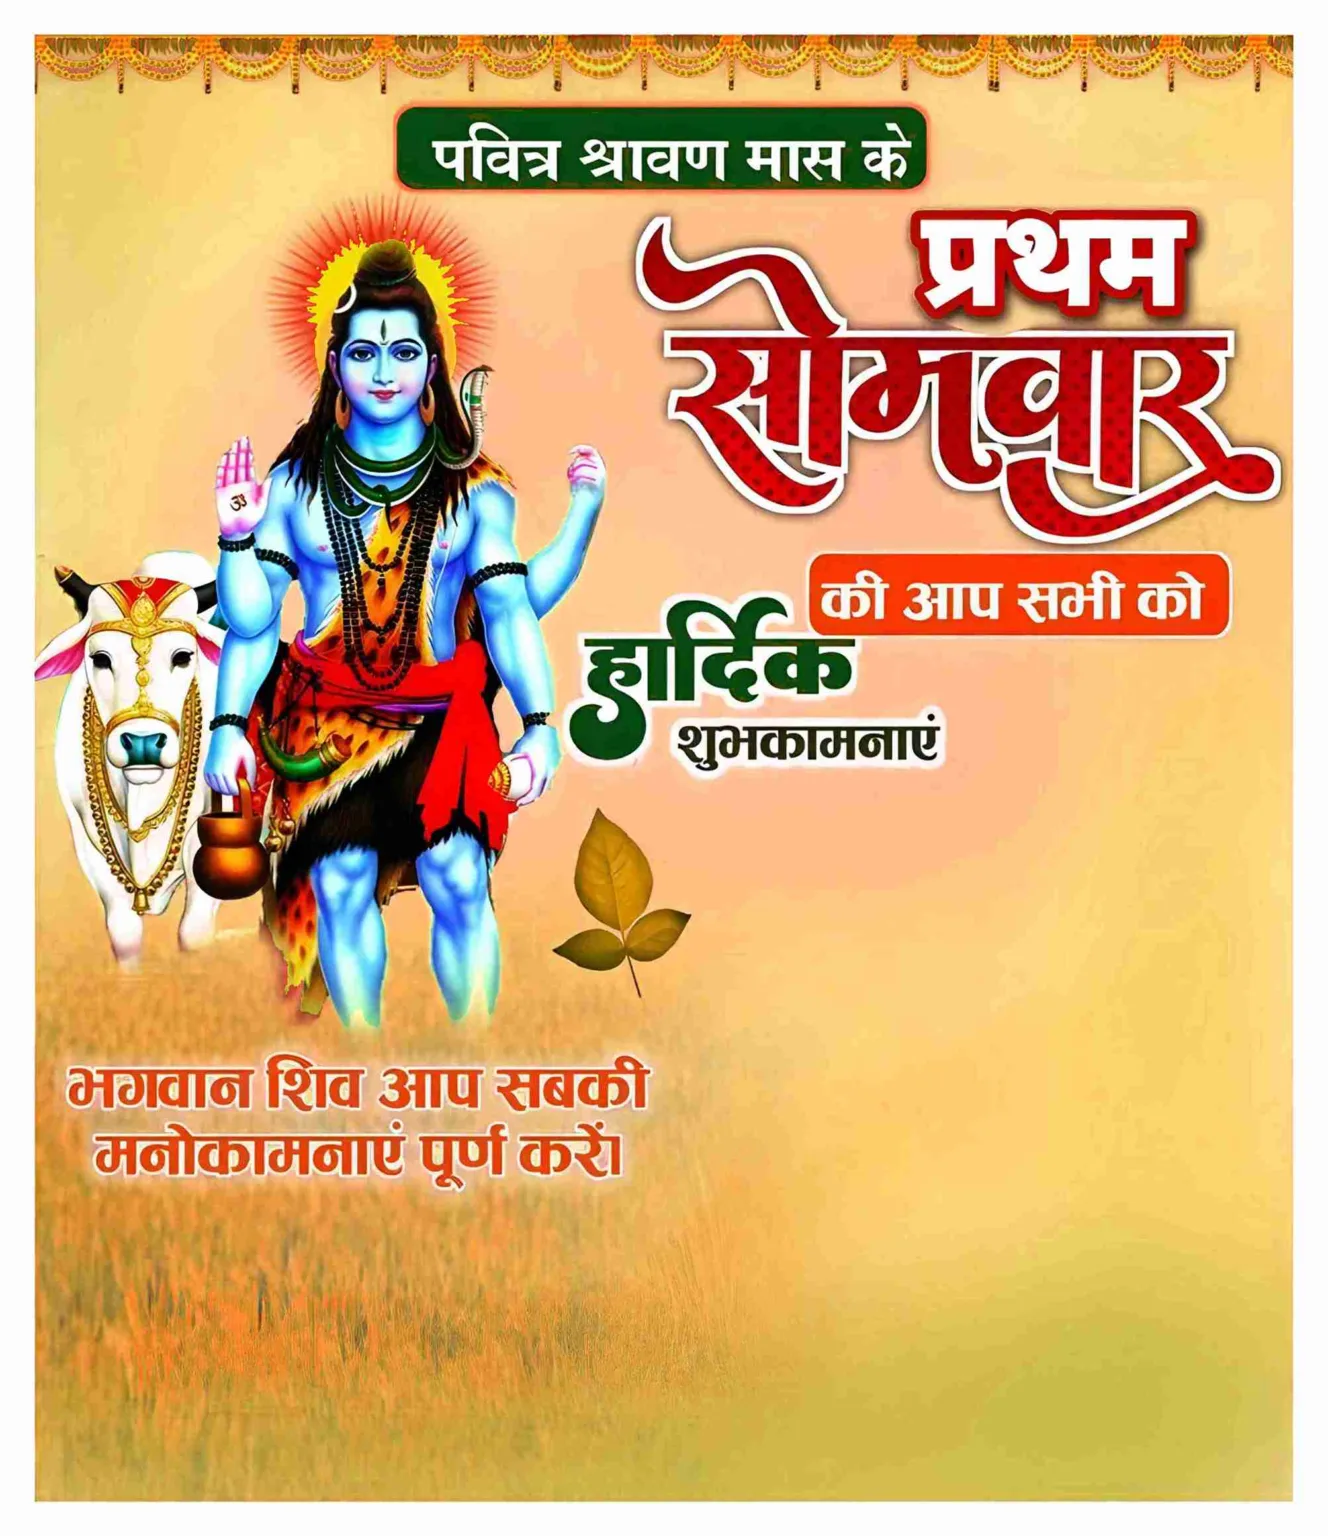 Maha Shivratri wishes poster background